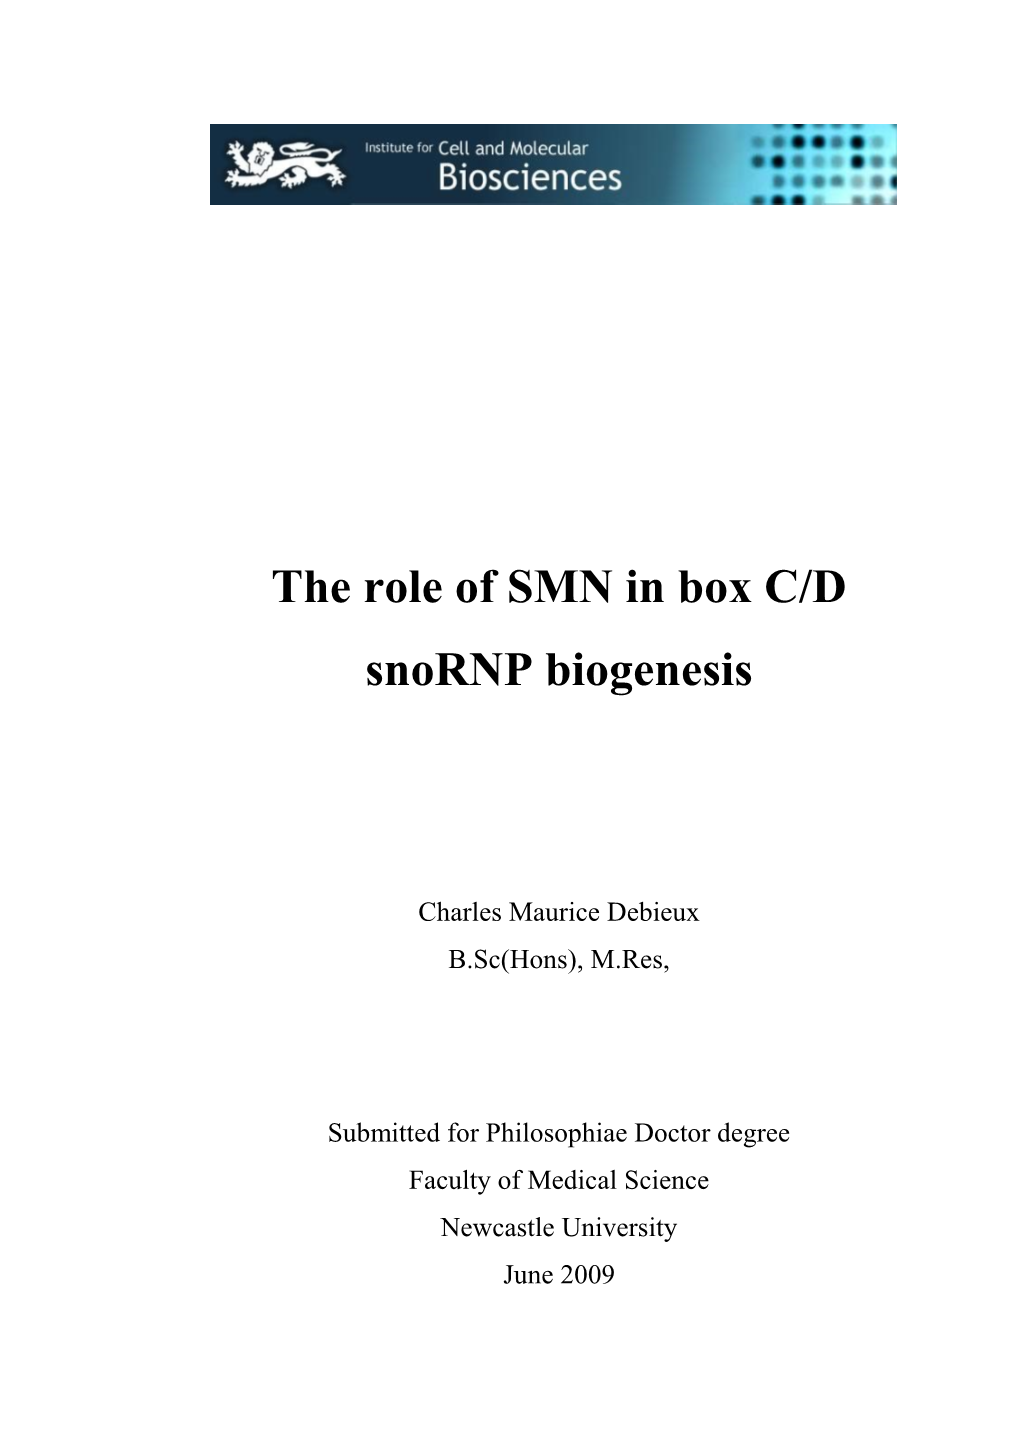 The Role of SMN in Box C/D Snornp Biogenesis